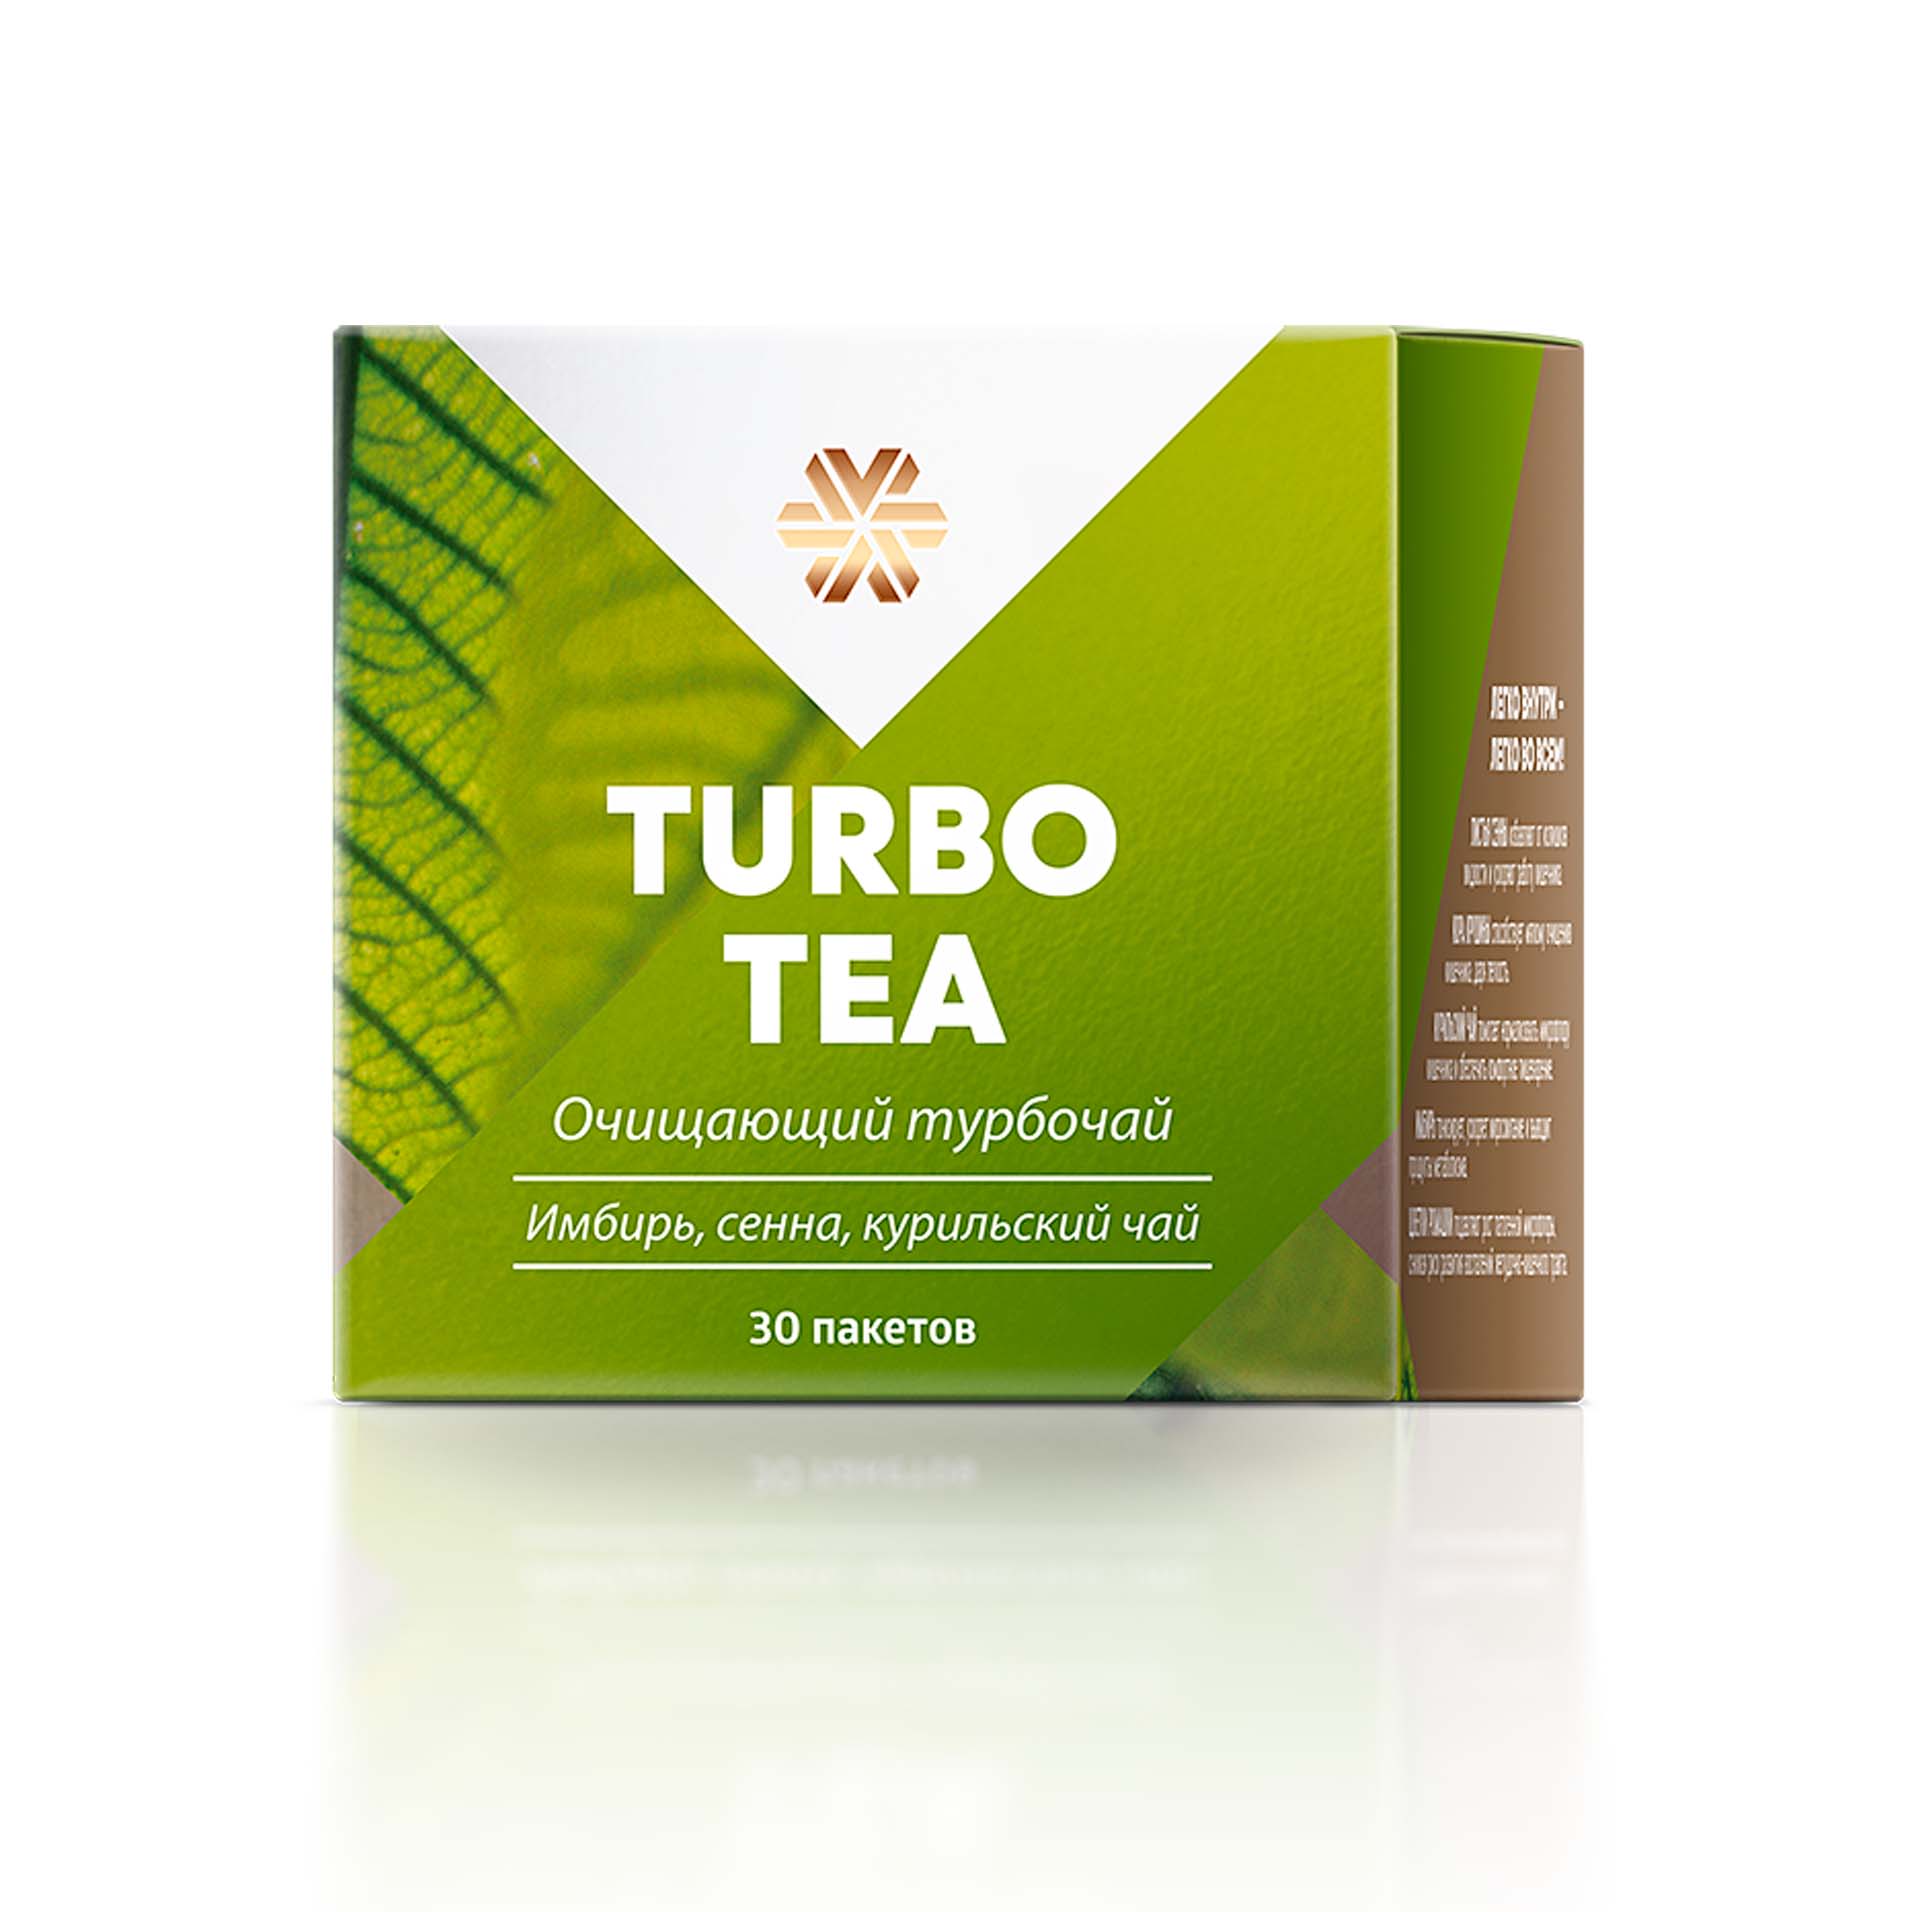 Turbo Tea (Очищающий турбочай)